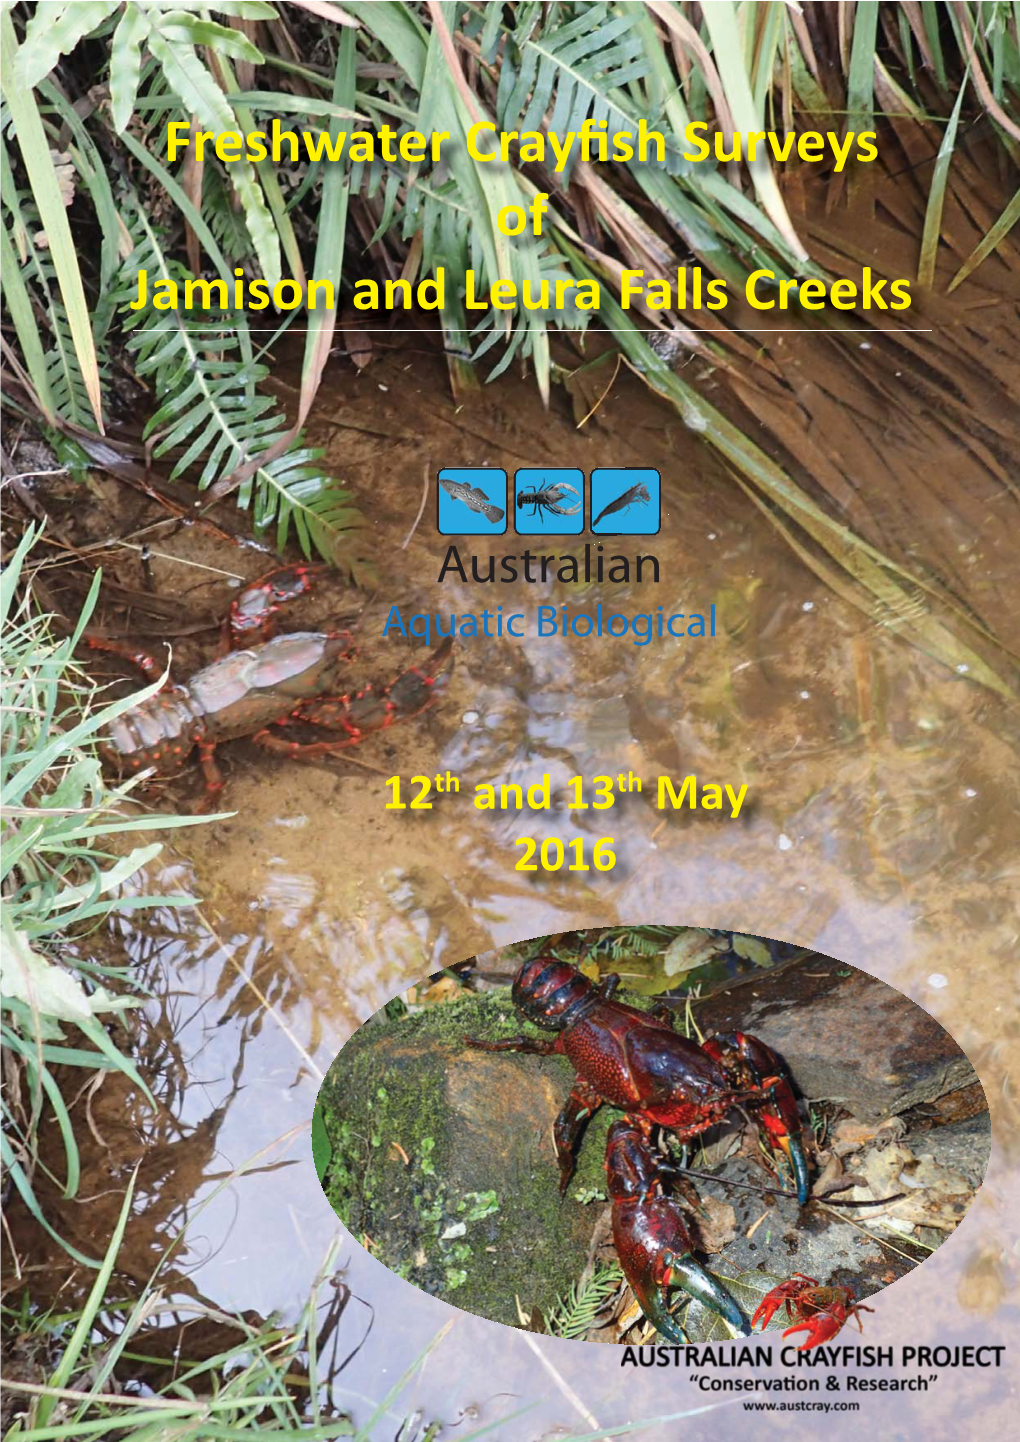 Freshwater Crayfish Surveys of Jamison and Leura Falls Creeks